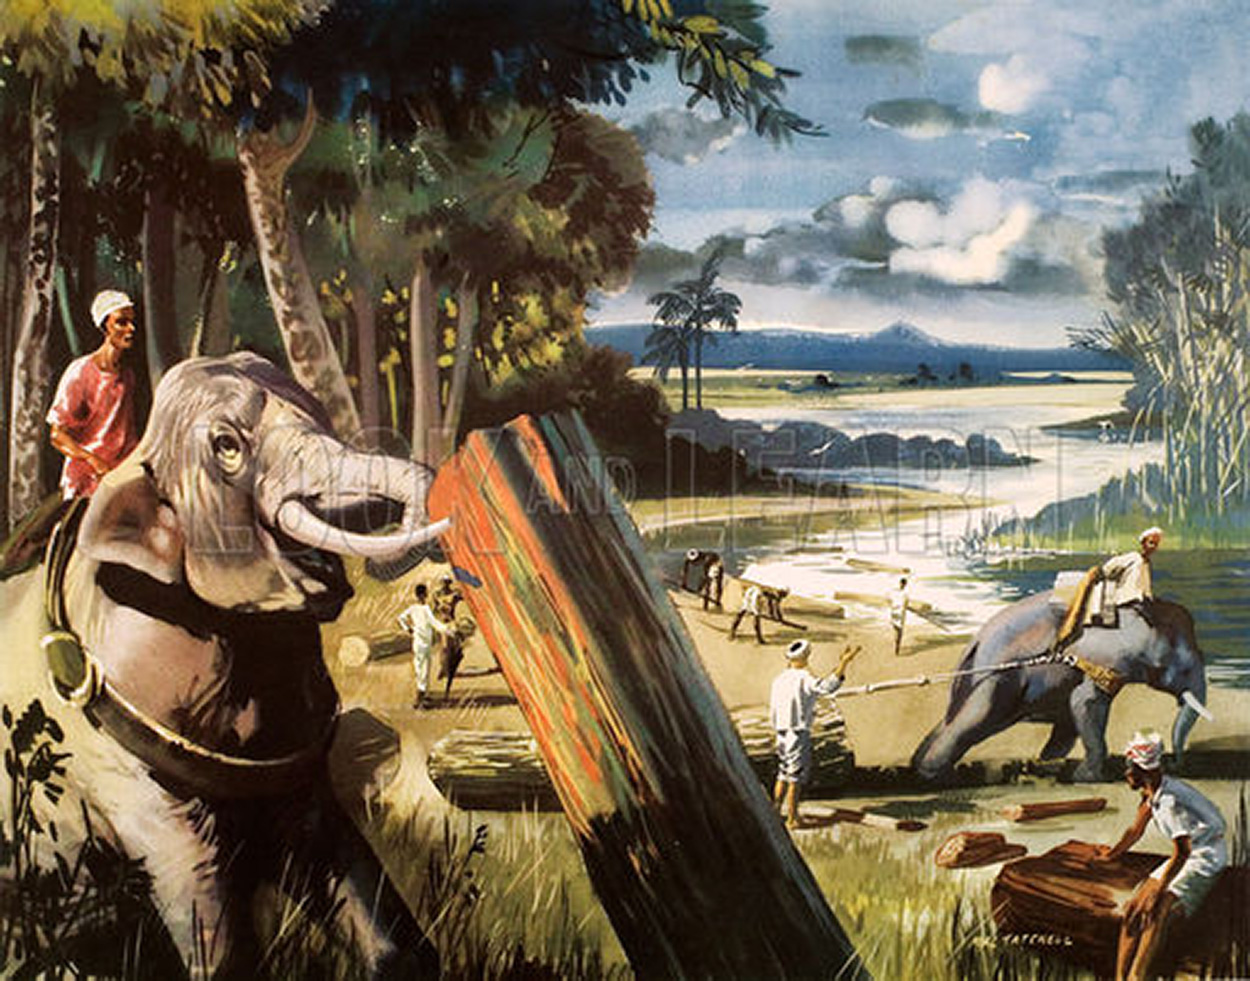 Elephant in a Burmese teak forest (Original Macmillan Poster) (Print) art by Mac Tatchell at The Illustration Art Gallery